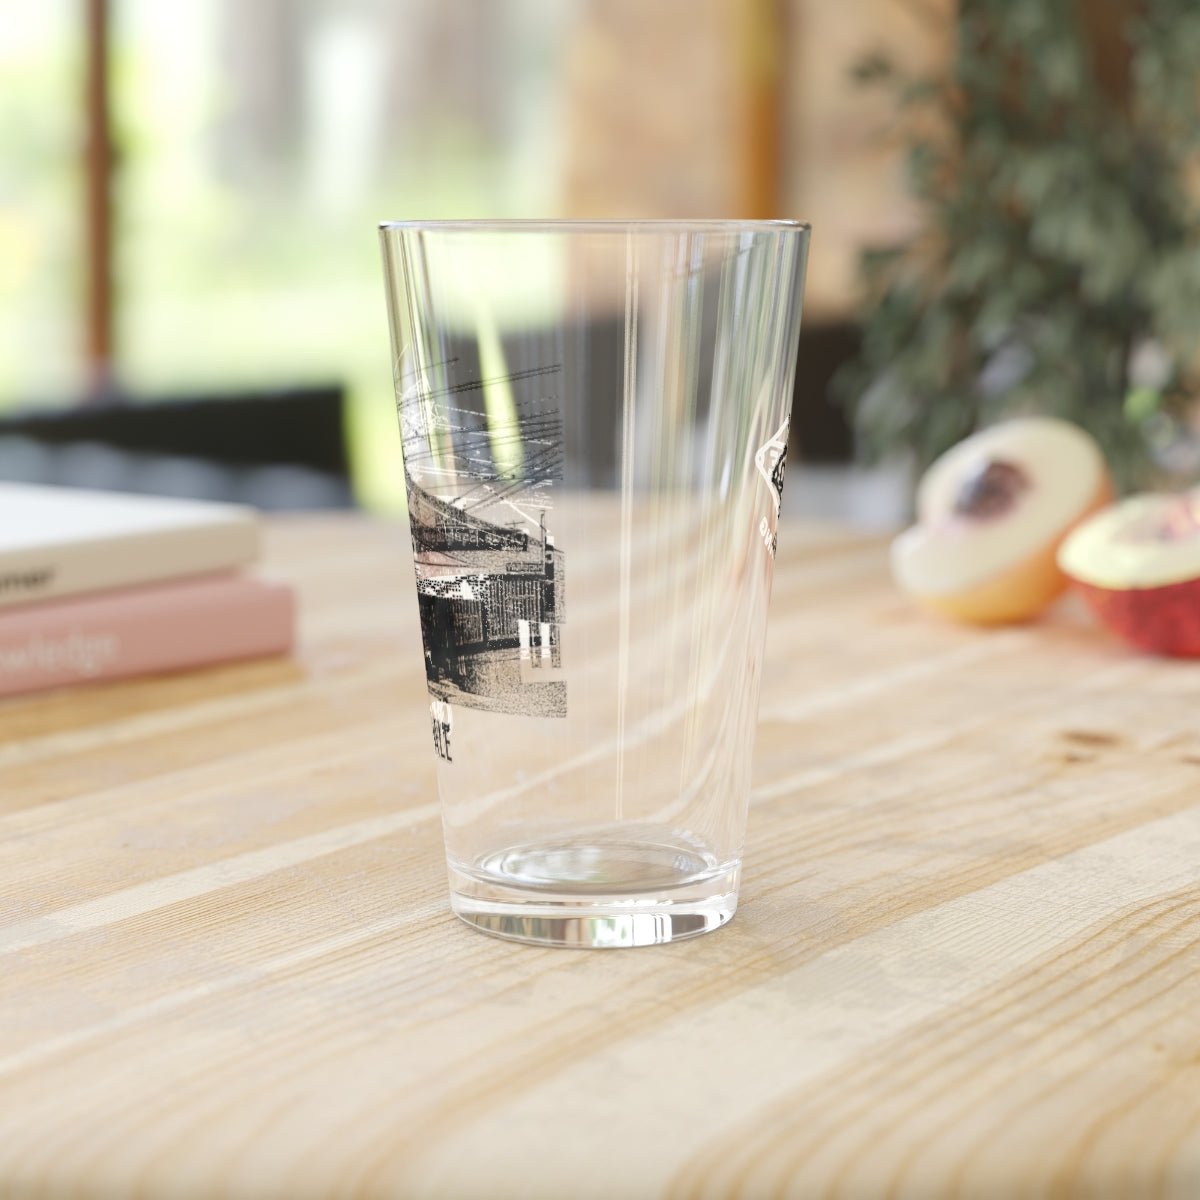 Cream Ale Pint Glass, 16oz - DSP On Demand